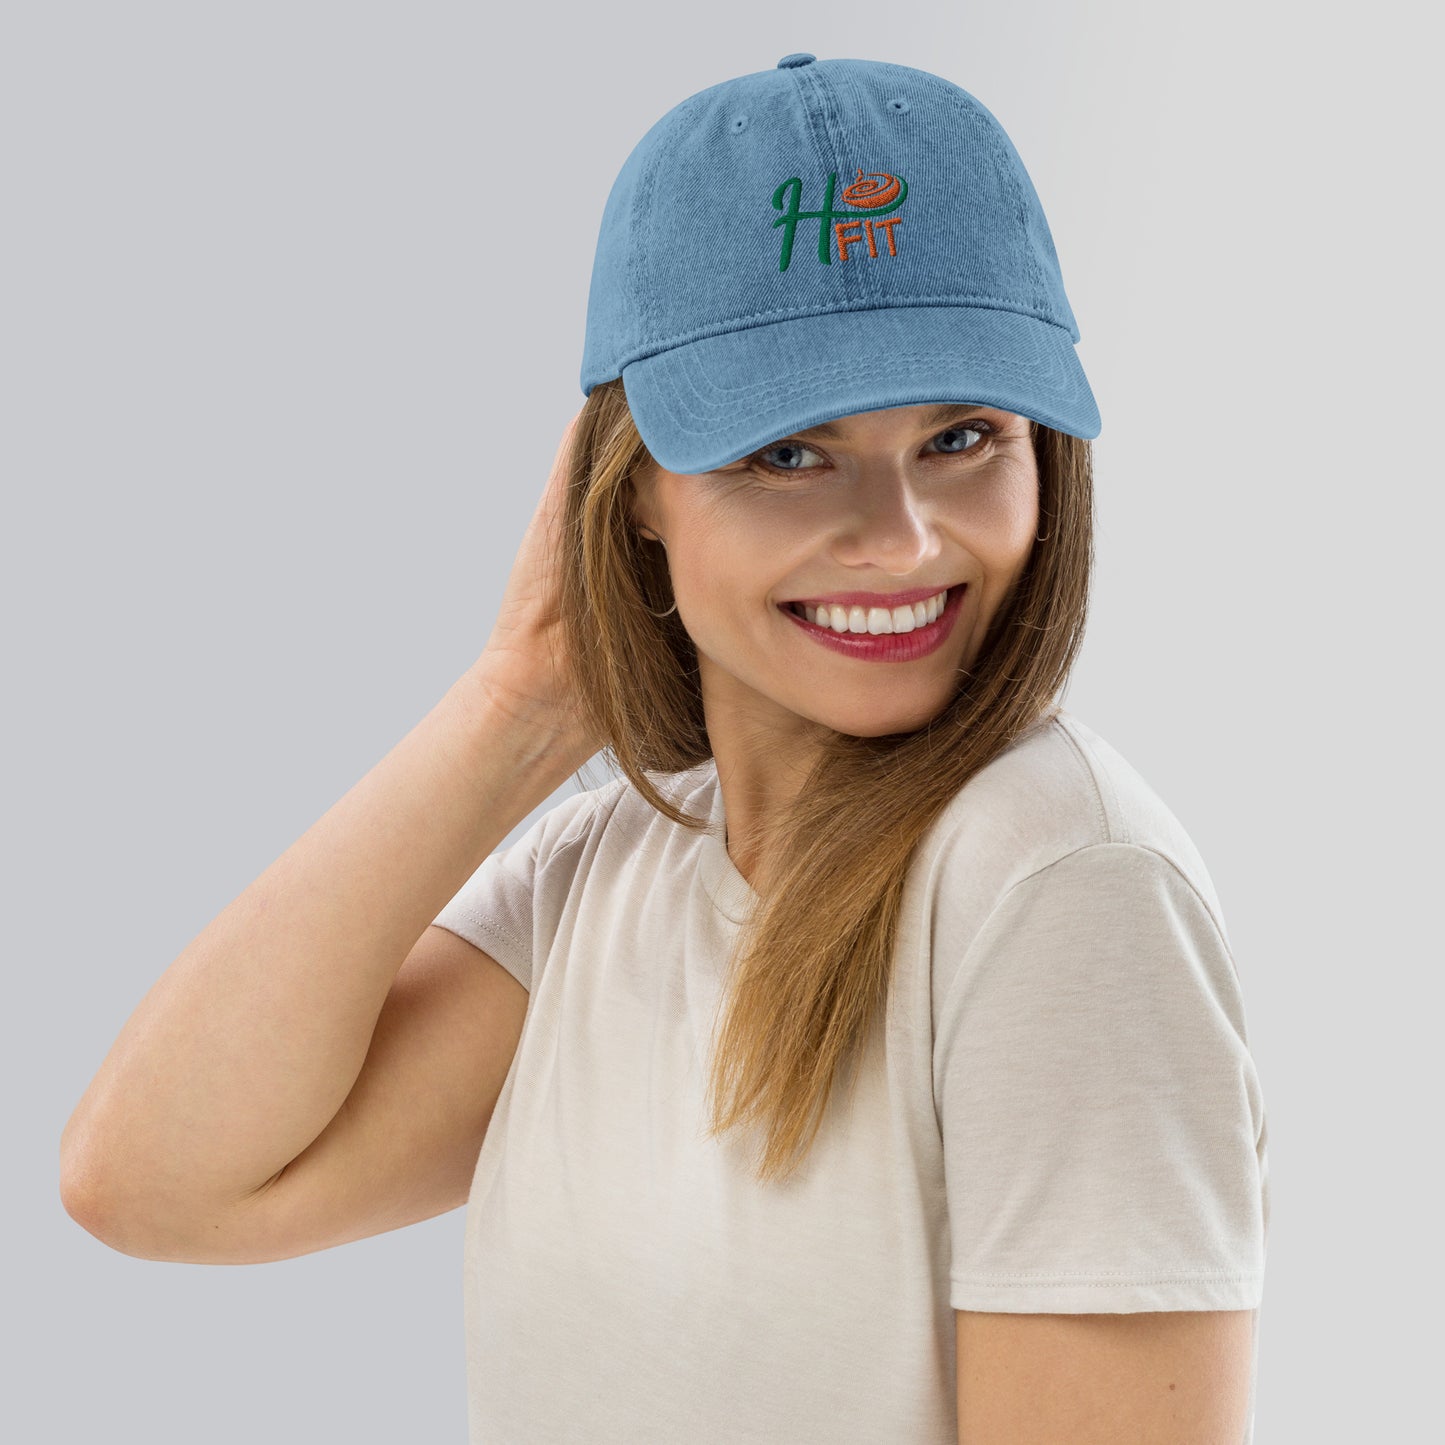 H-Fit Blue Denim Hat